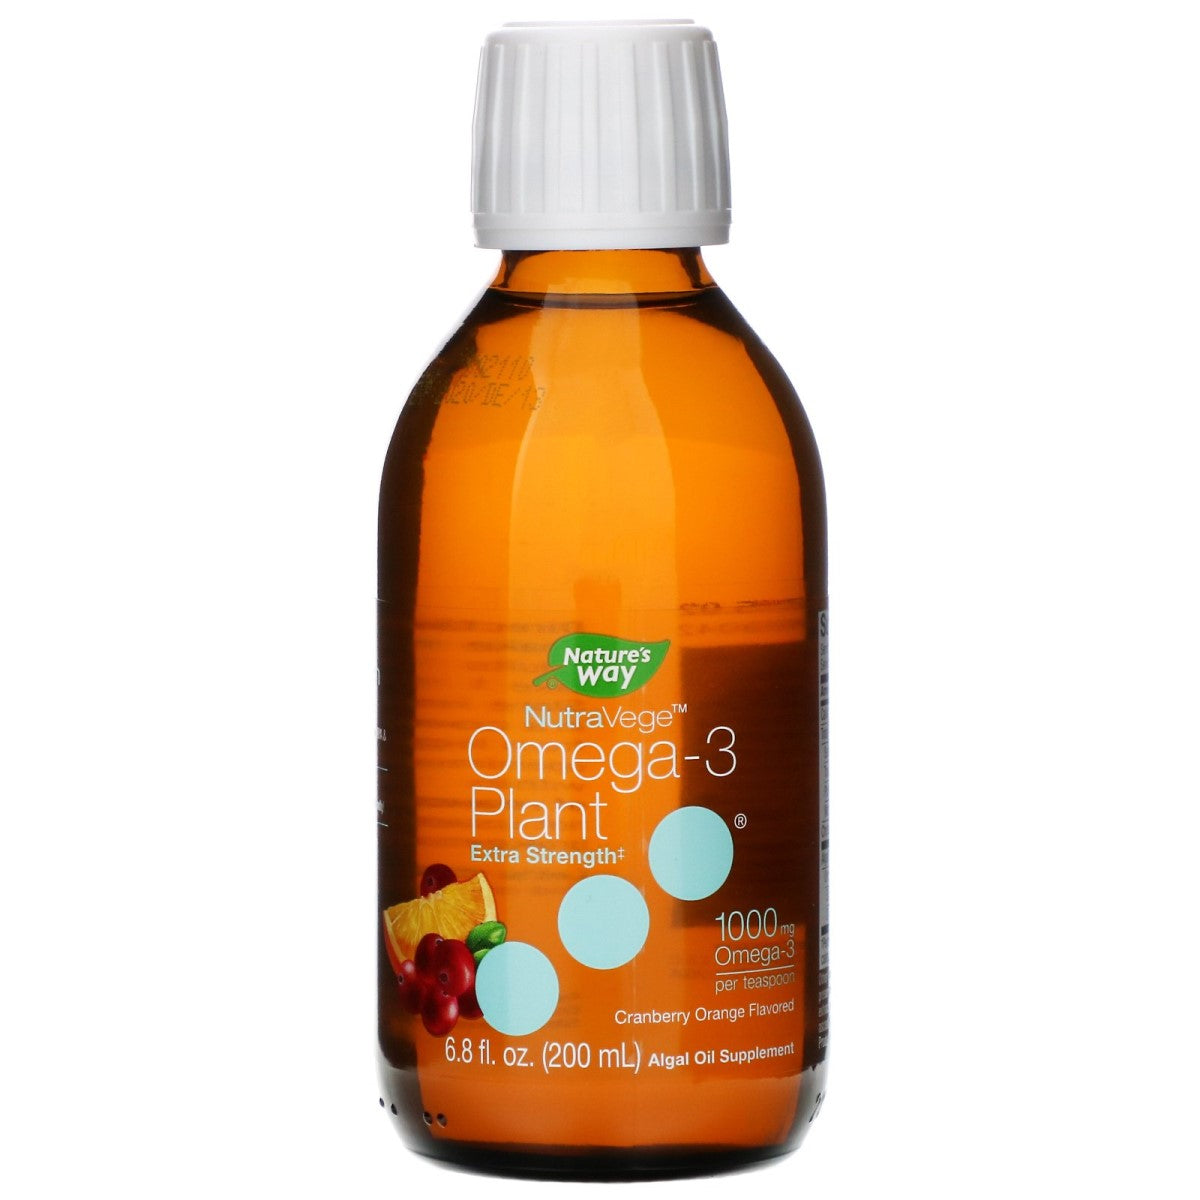 Primary image of NutraVege Extra Strength Omega-3 Plant (Cranberry Orange)